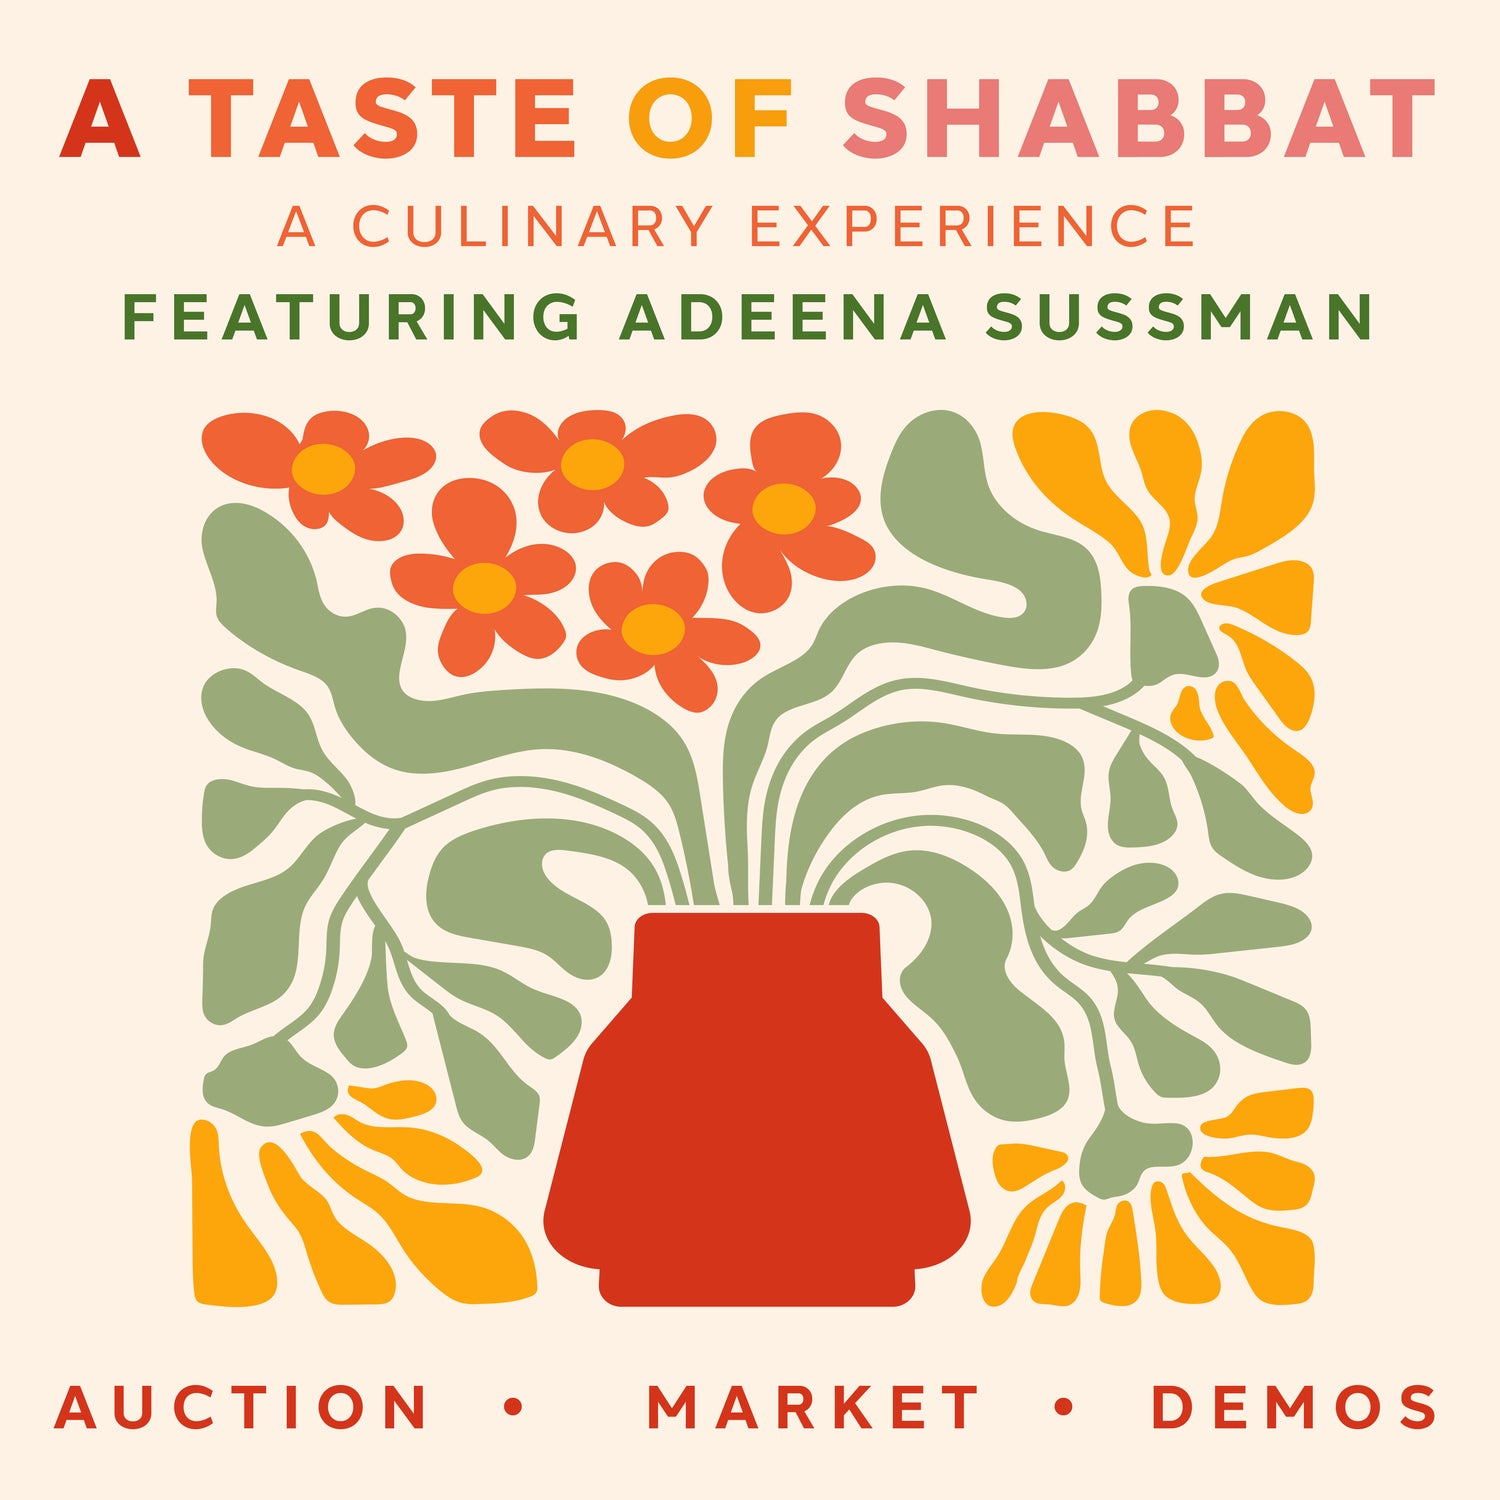 A Taste of Shabbat